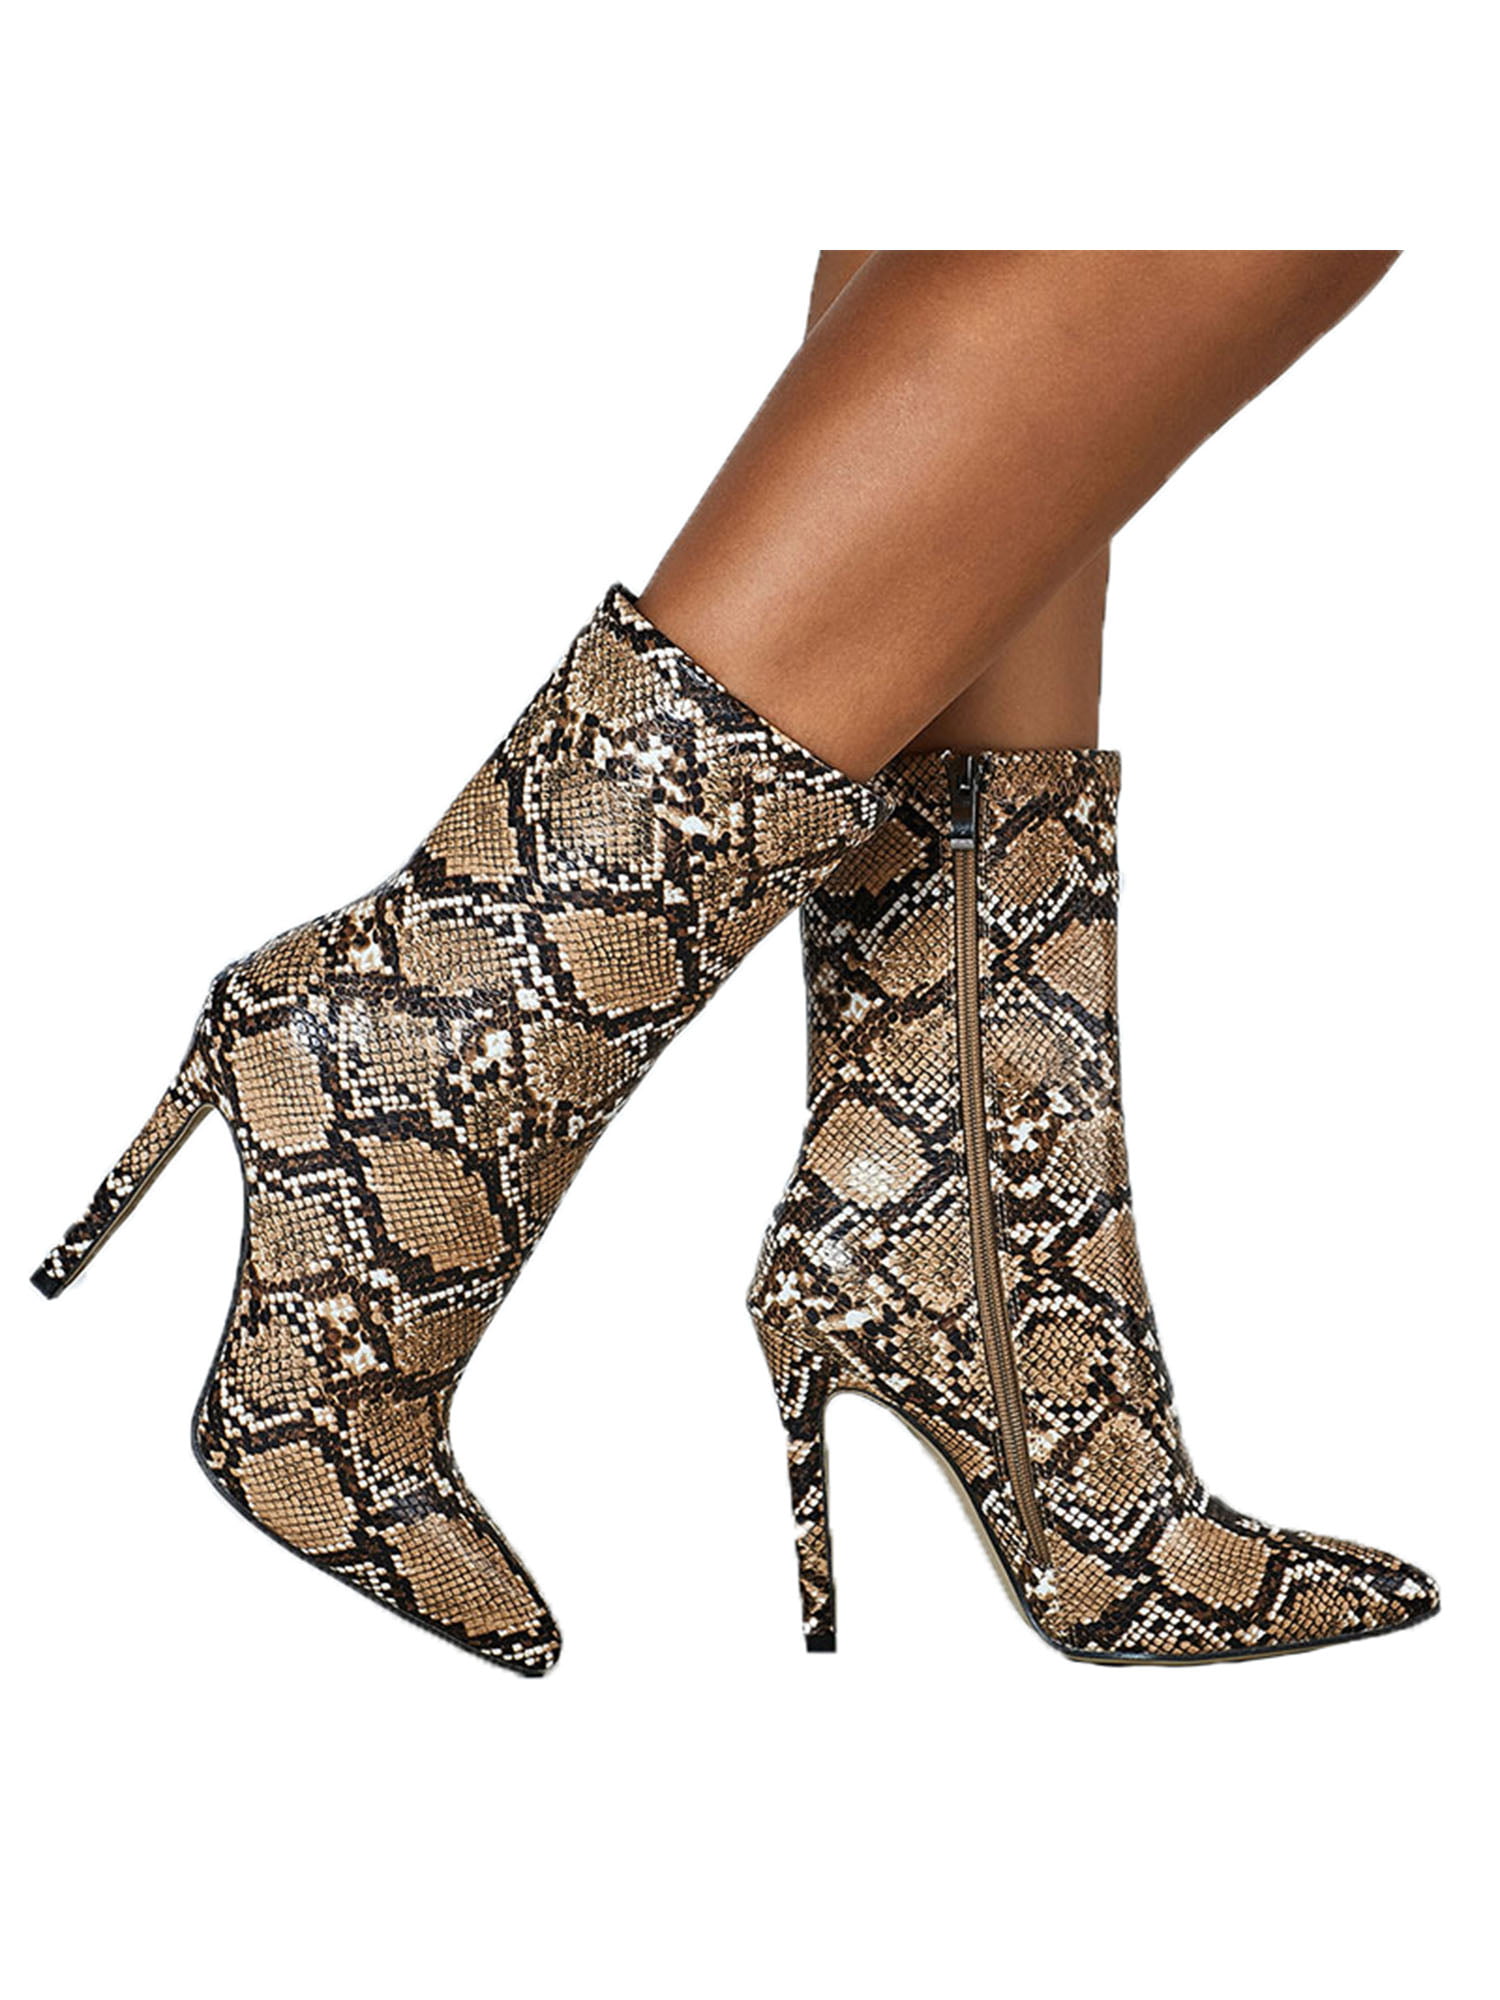 Womens Snakeskin Leopard Print Ankle Booties Pointed Toe Fine Heel Booties Shoes